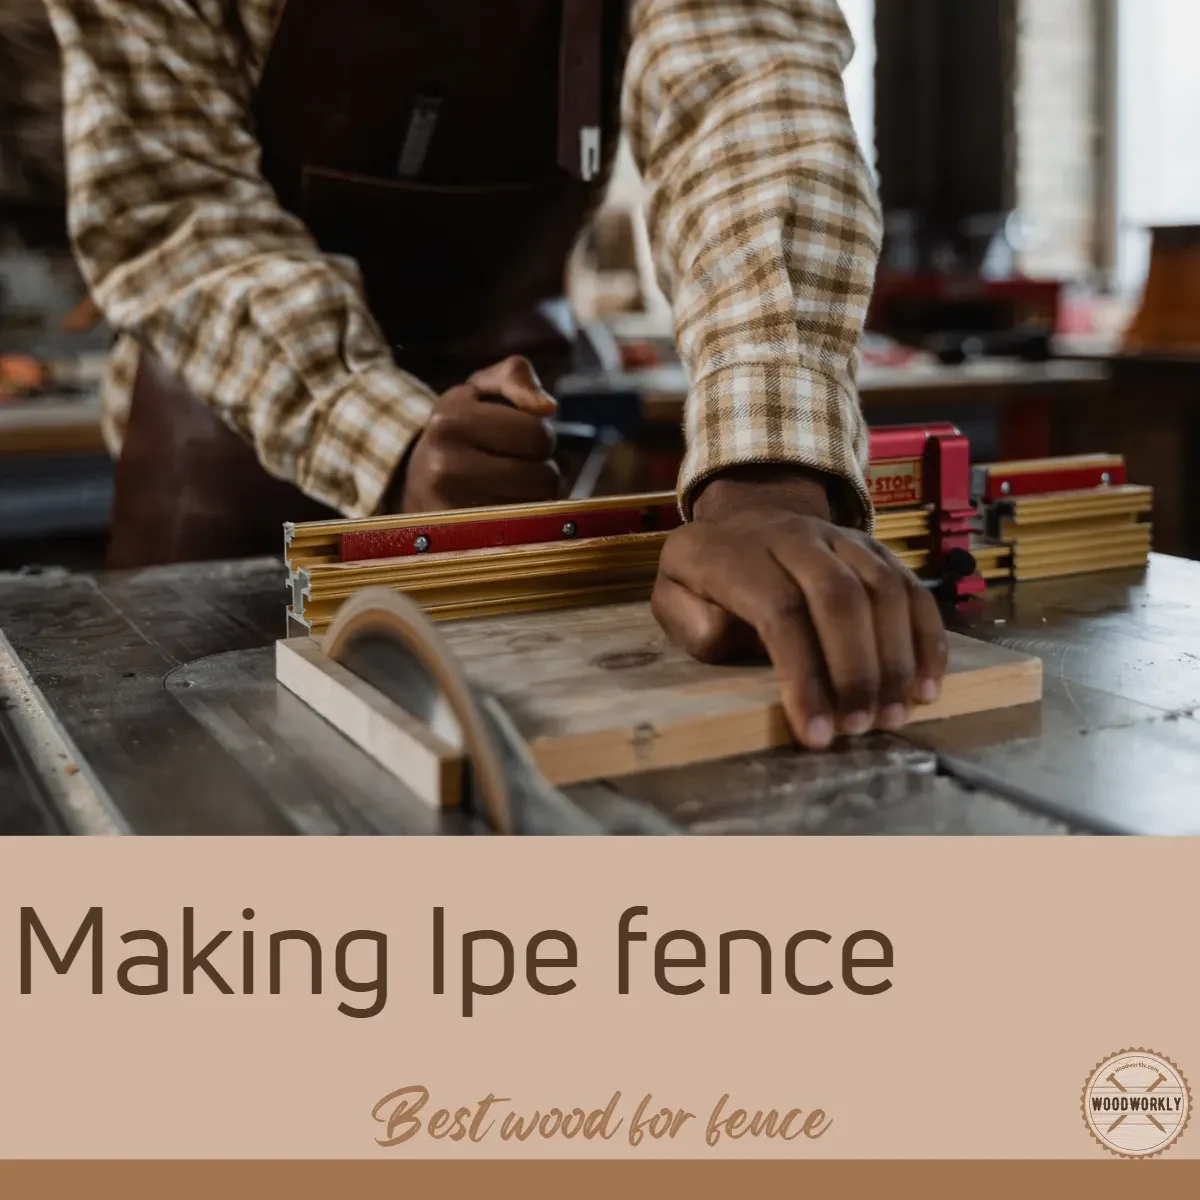 Making Ipe fence